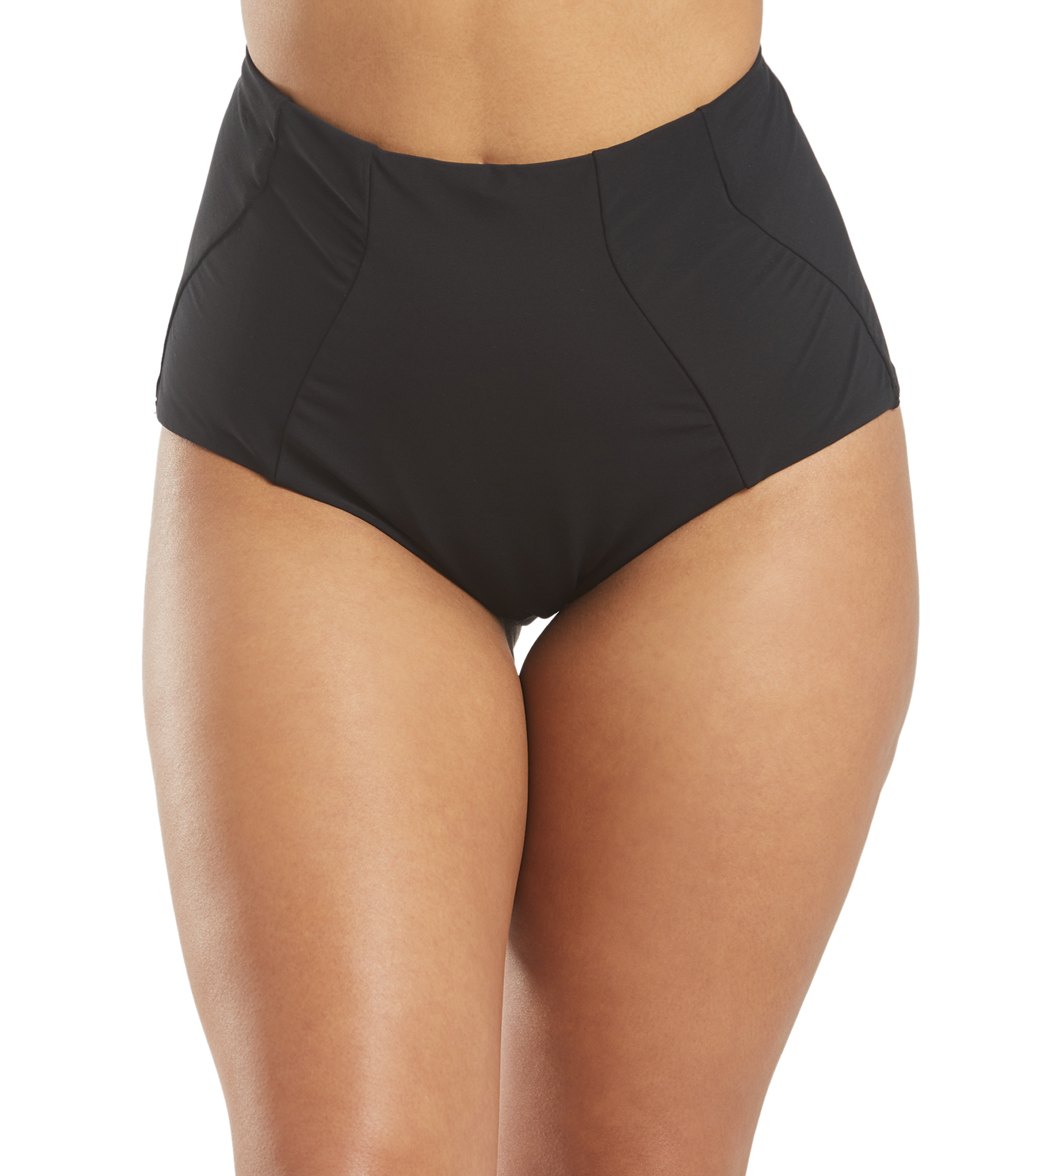 Jets Swimwear Australia Conspire High Waist Bikini Bottom - Black 6 - Swimoutlet.com